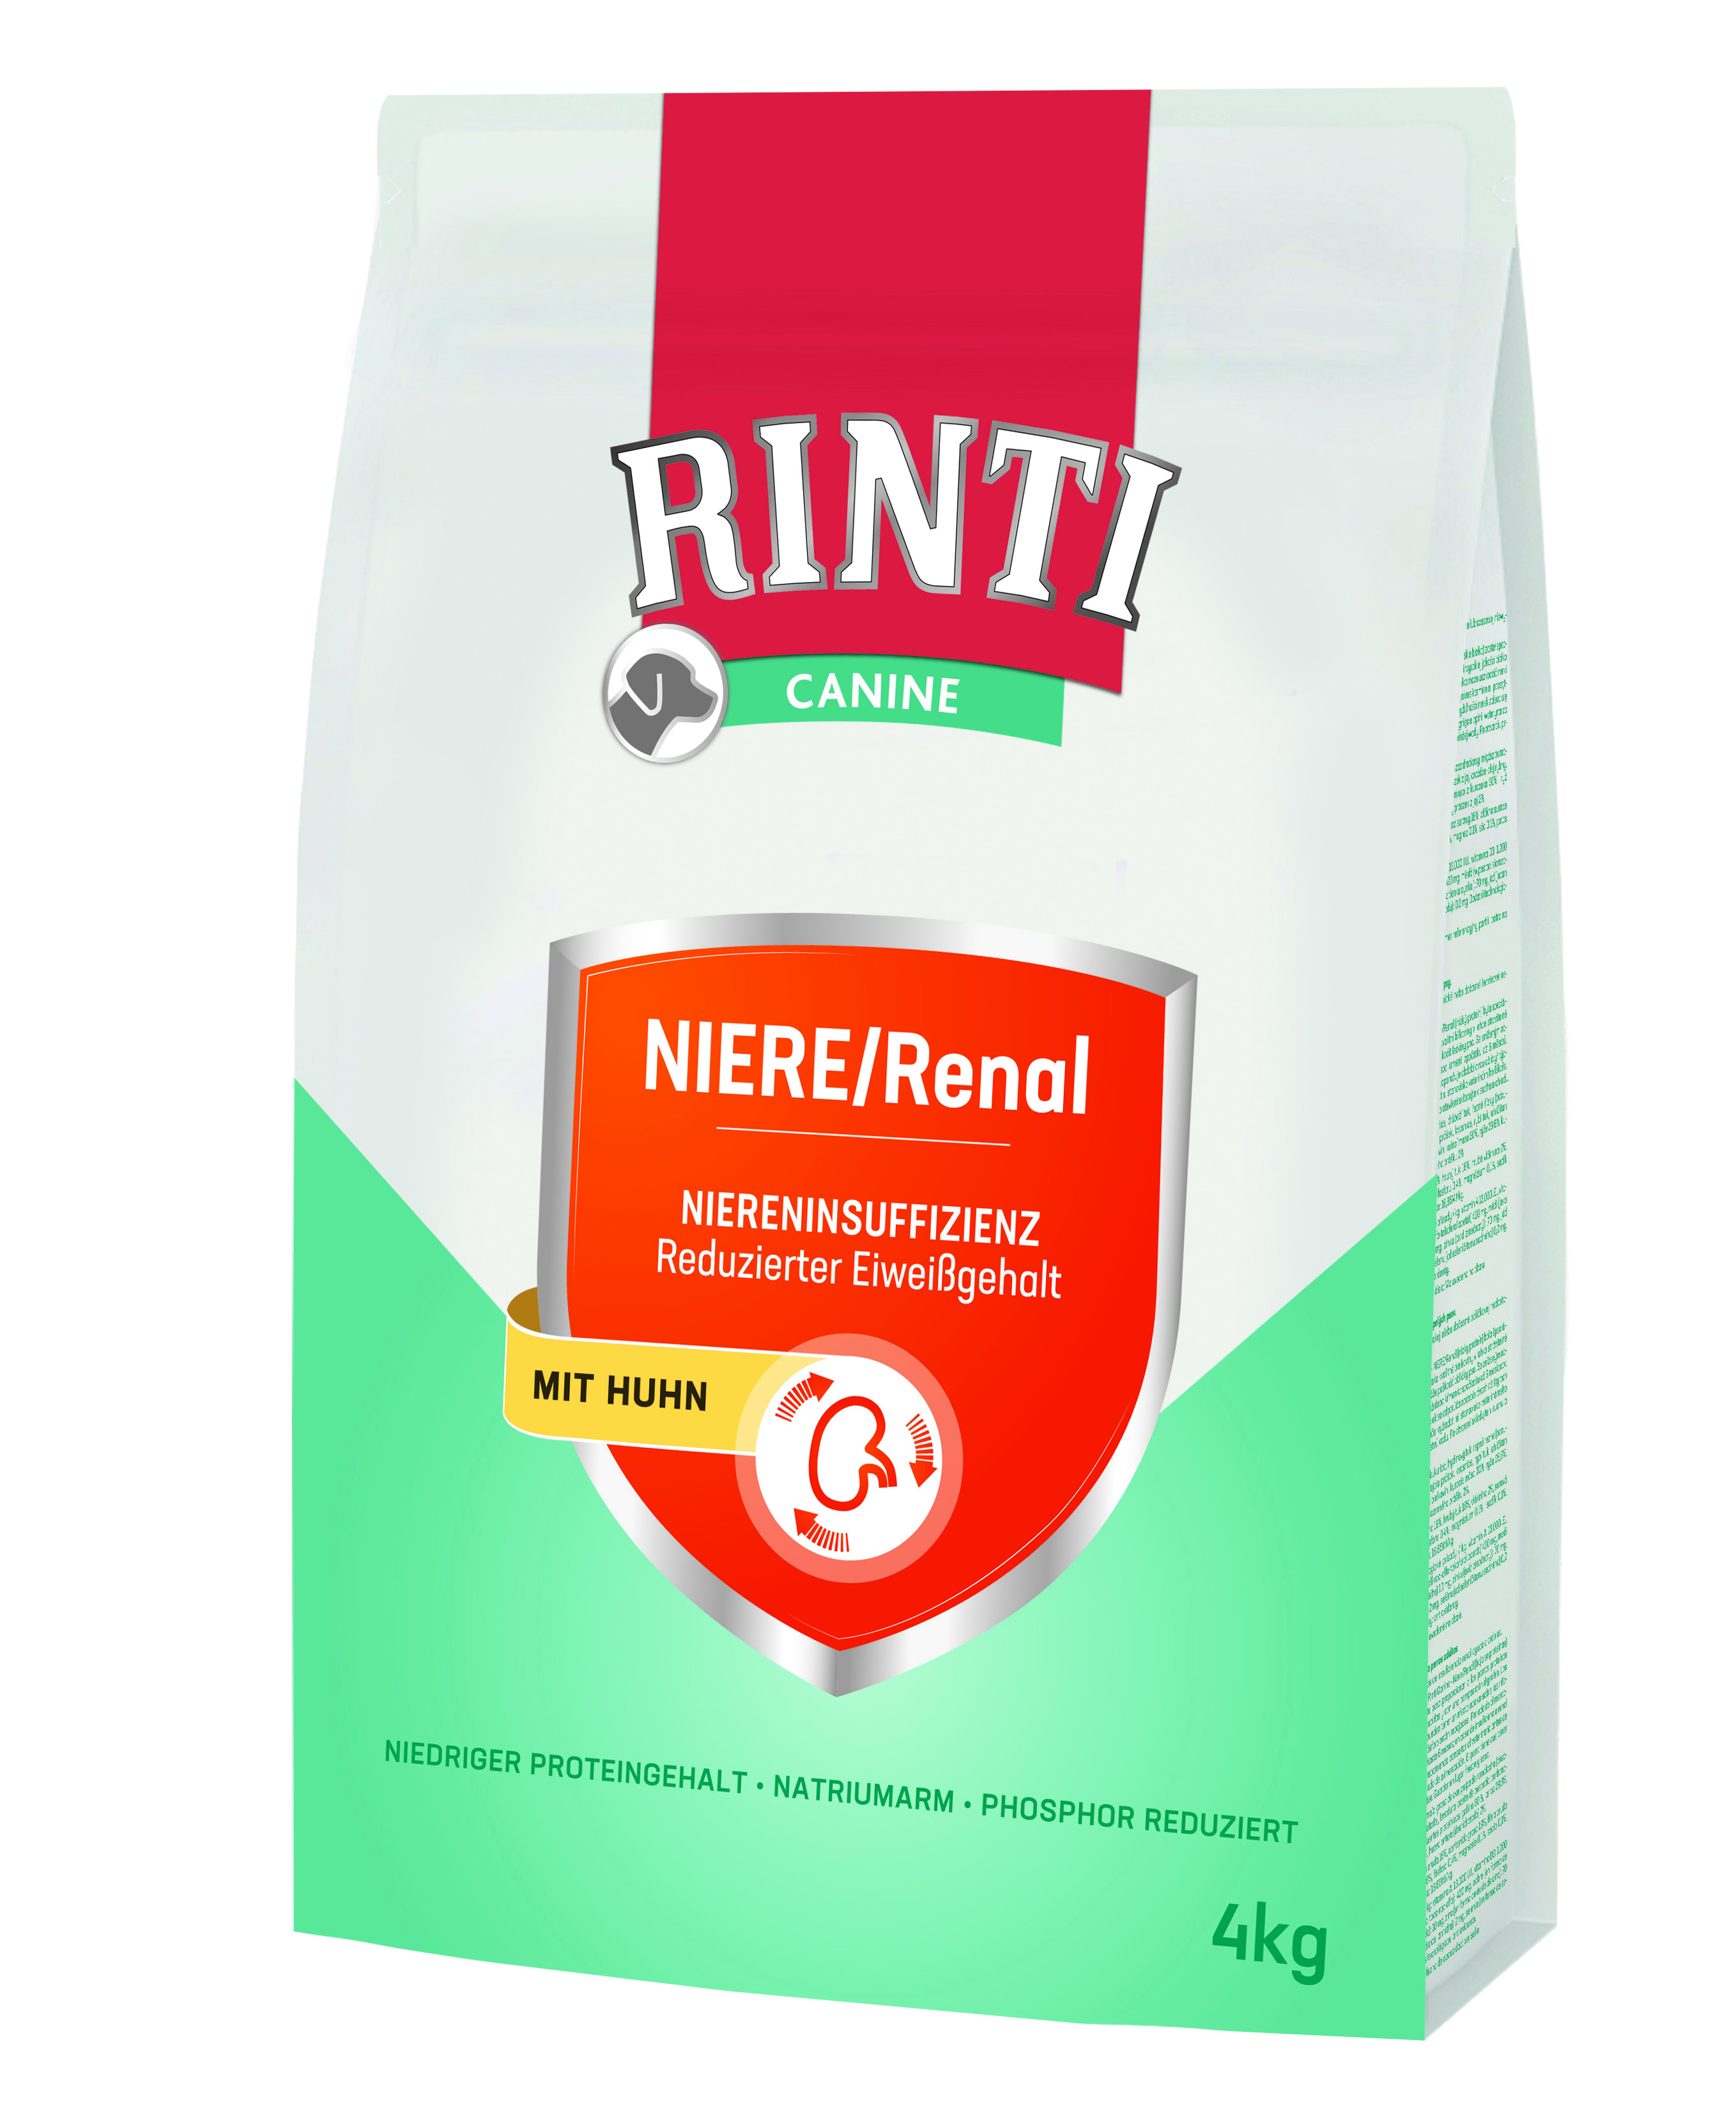 RINTI Canine NIERE/Renal  4kg